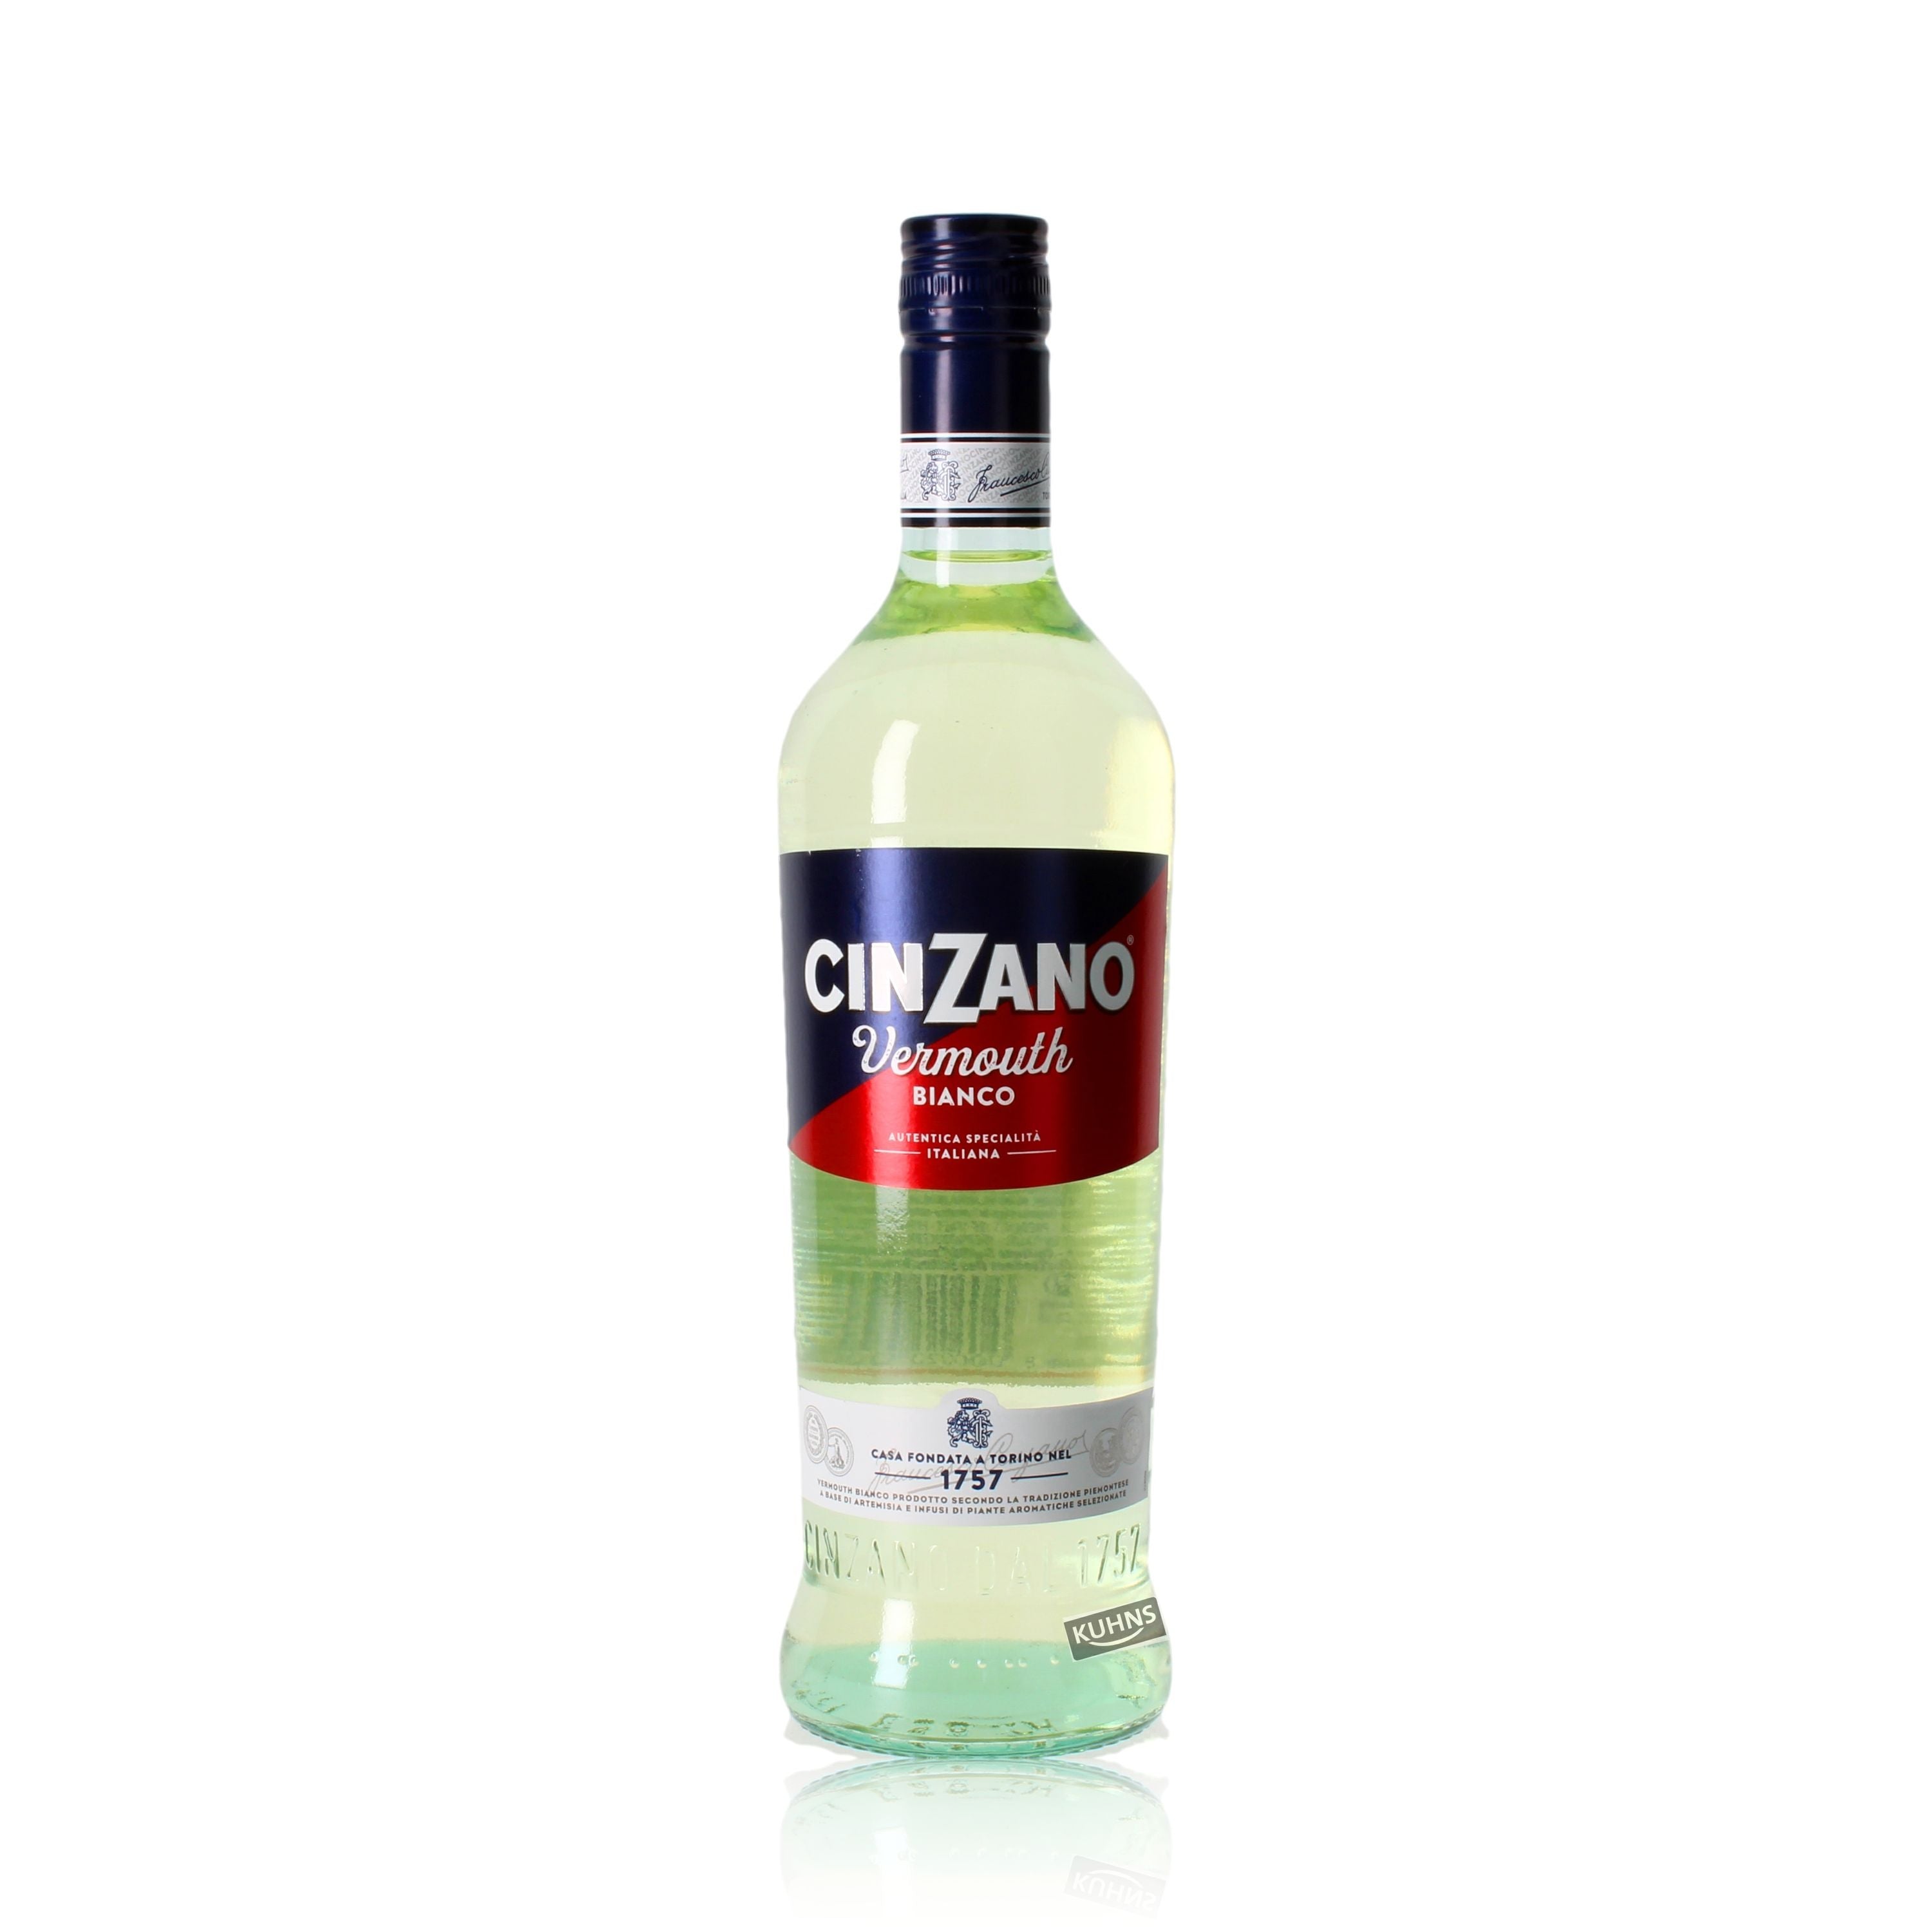 Cinzano Vermouth Bianco 0.75l, alc. 15% by volume wormwood